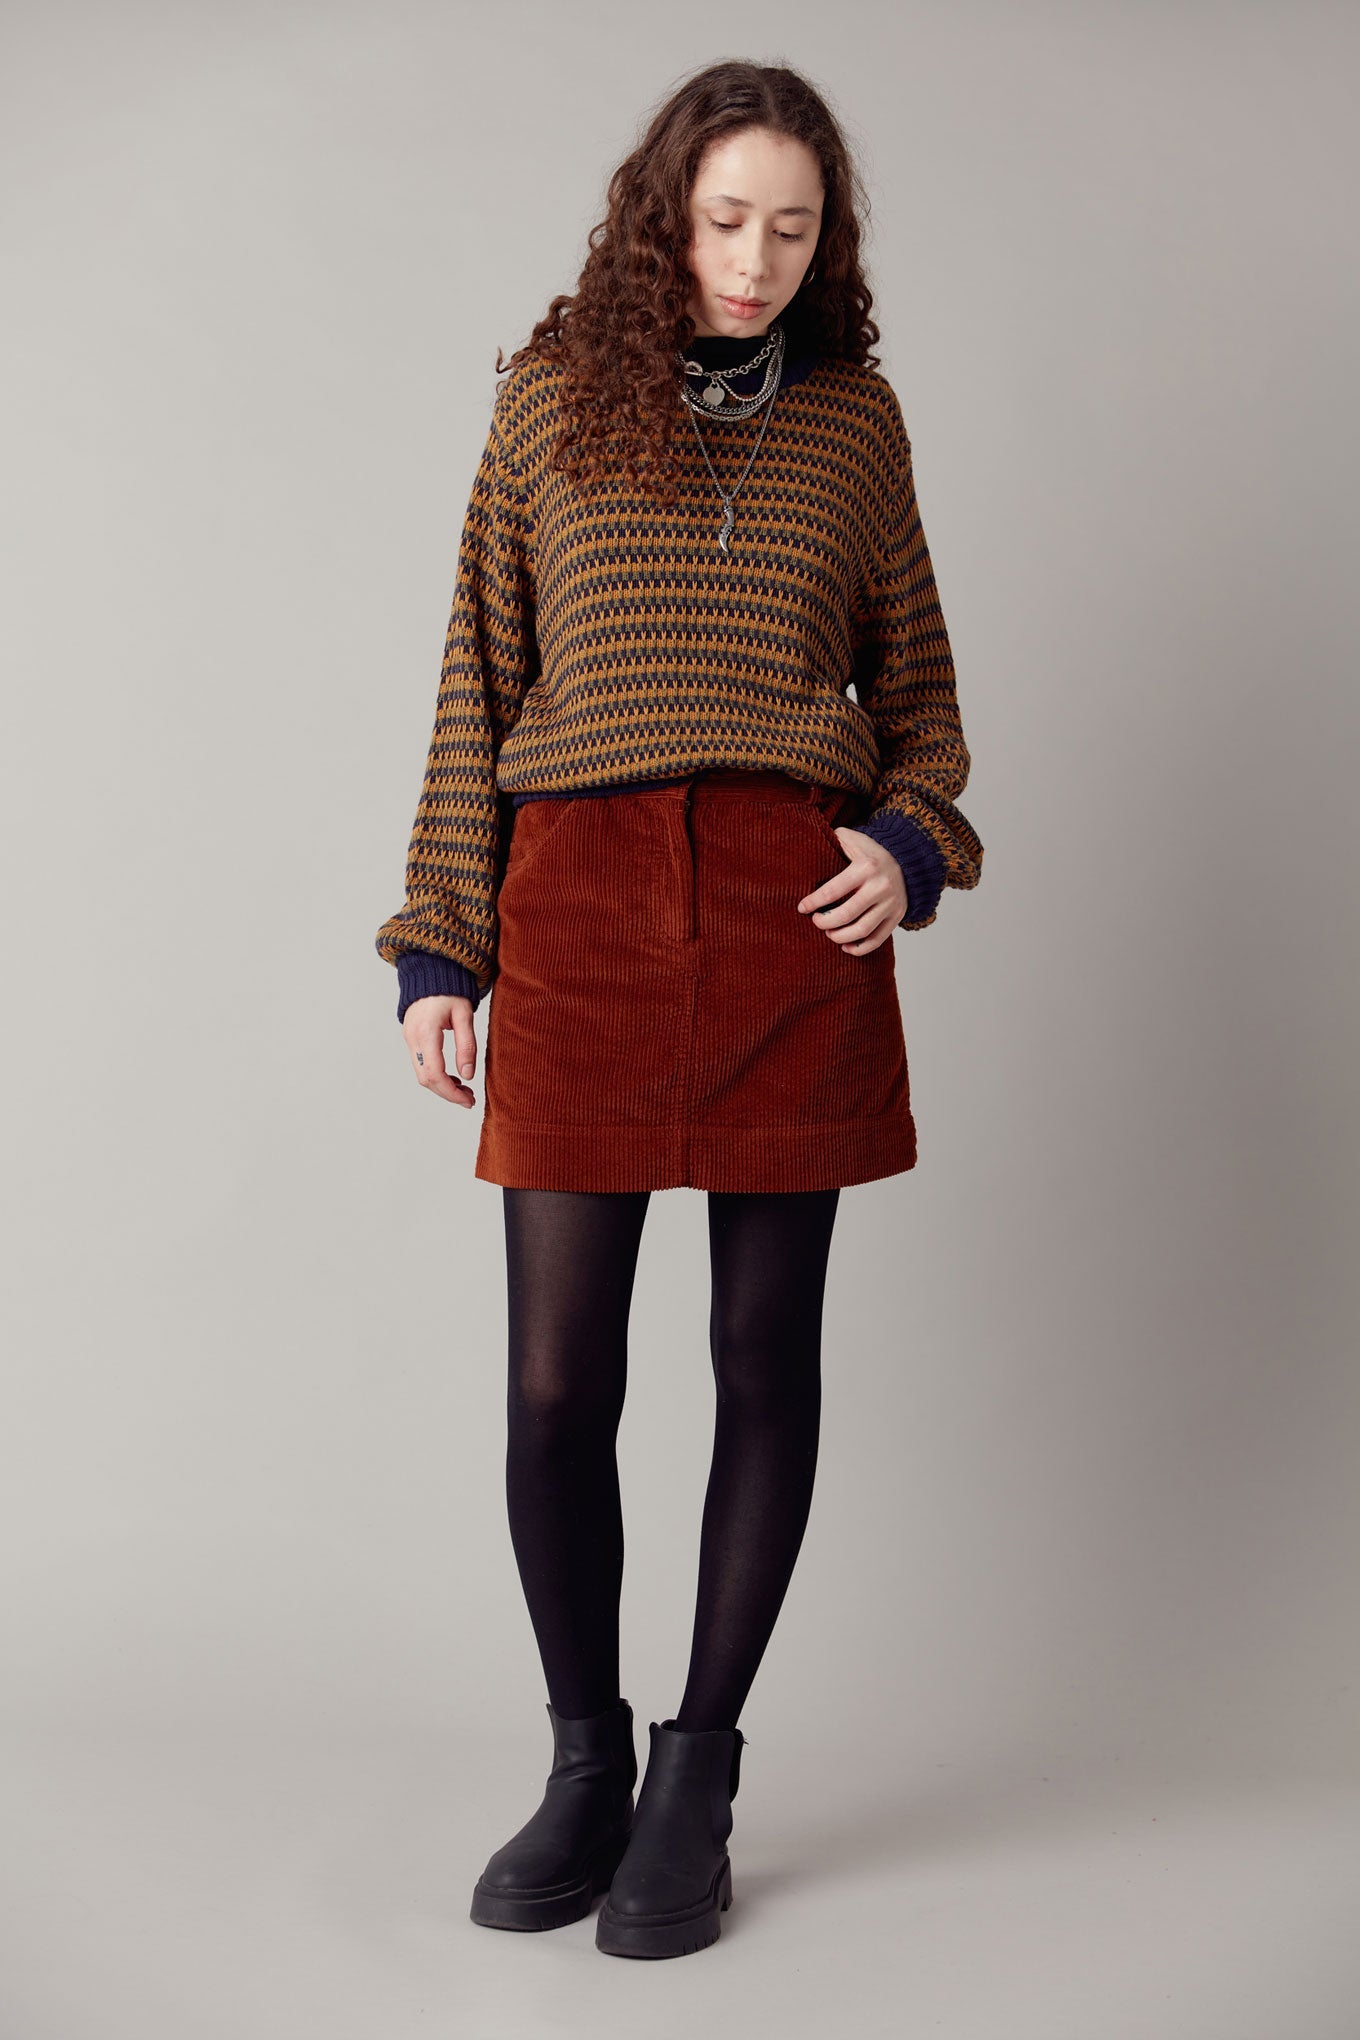 Red-brown corduroy mini skirt LEONI made of 100% organic cotton from Komodo